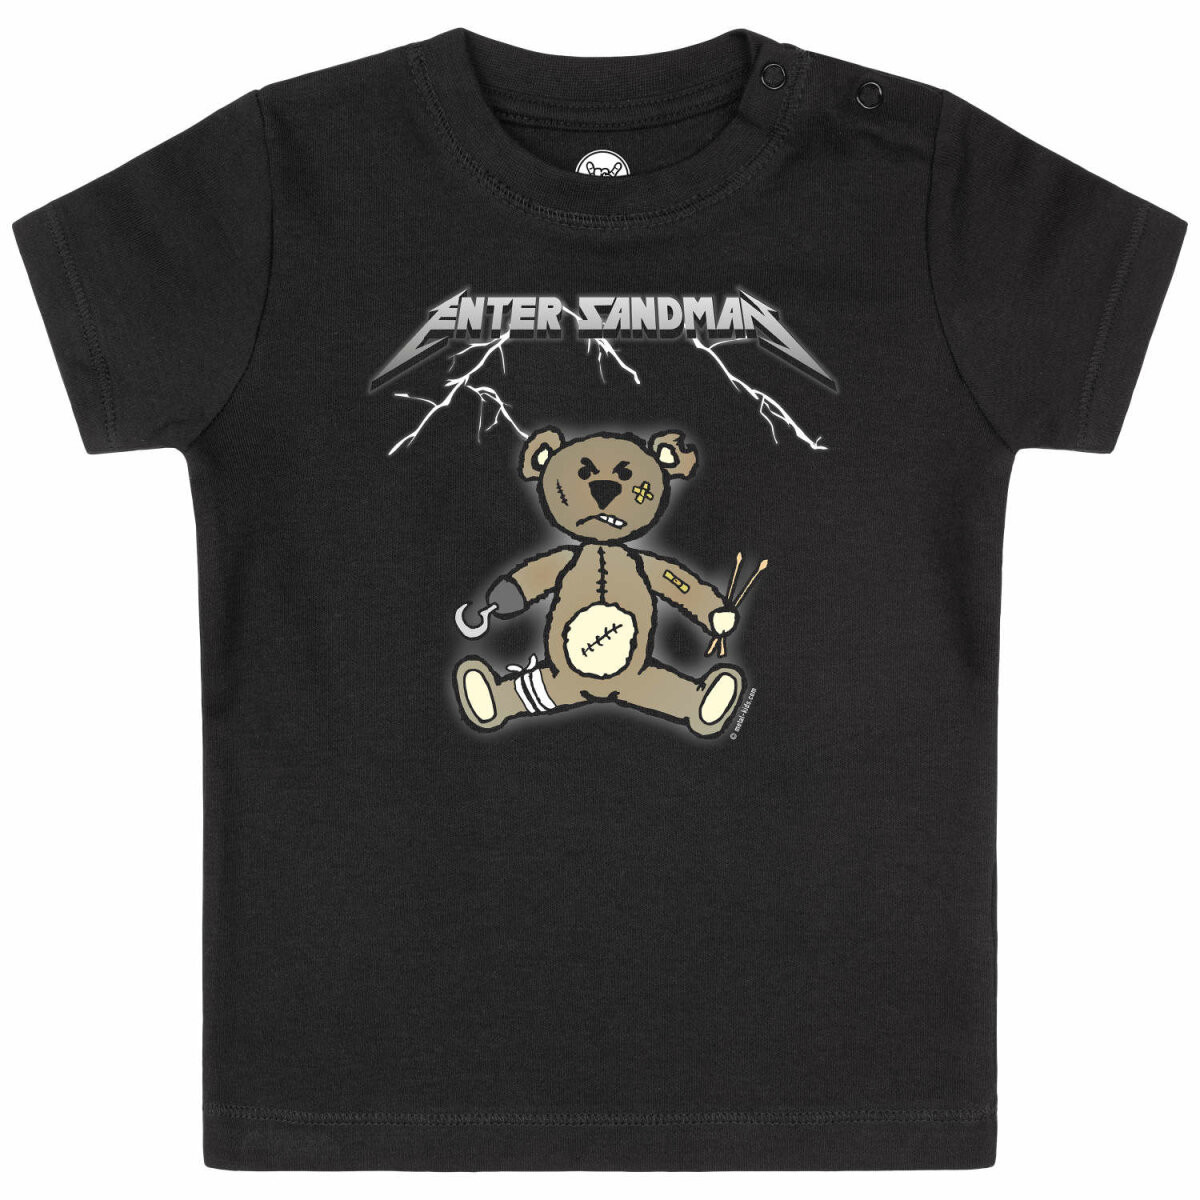 Metallica Baby t-shirt - (Enter Sandman)